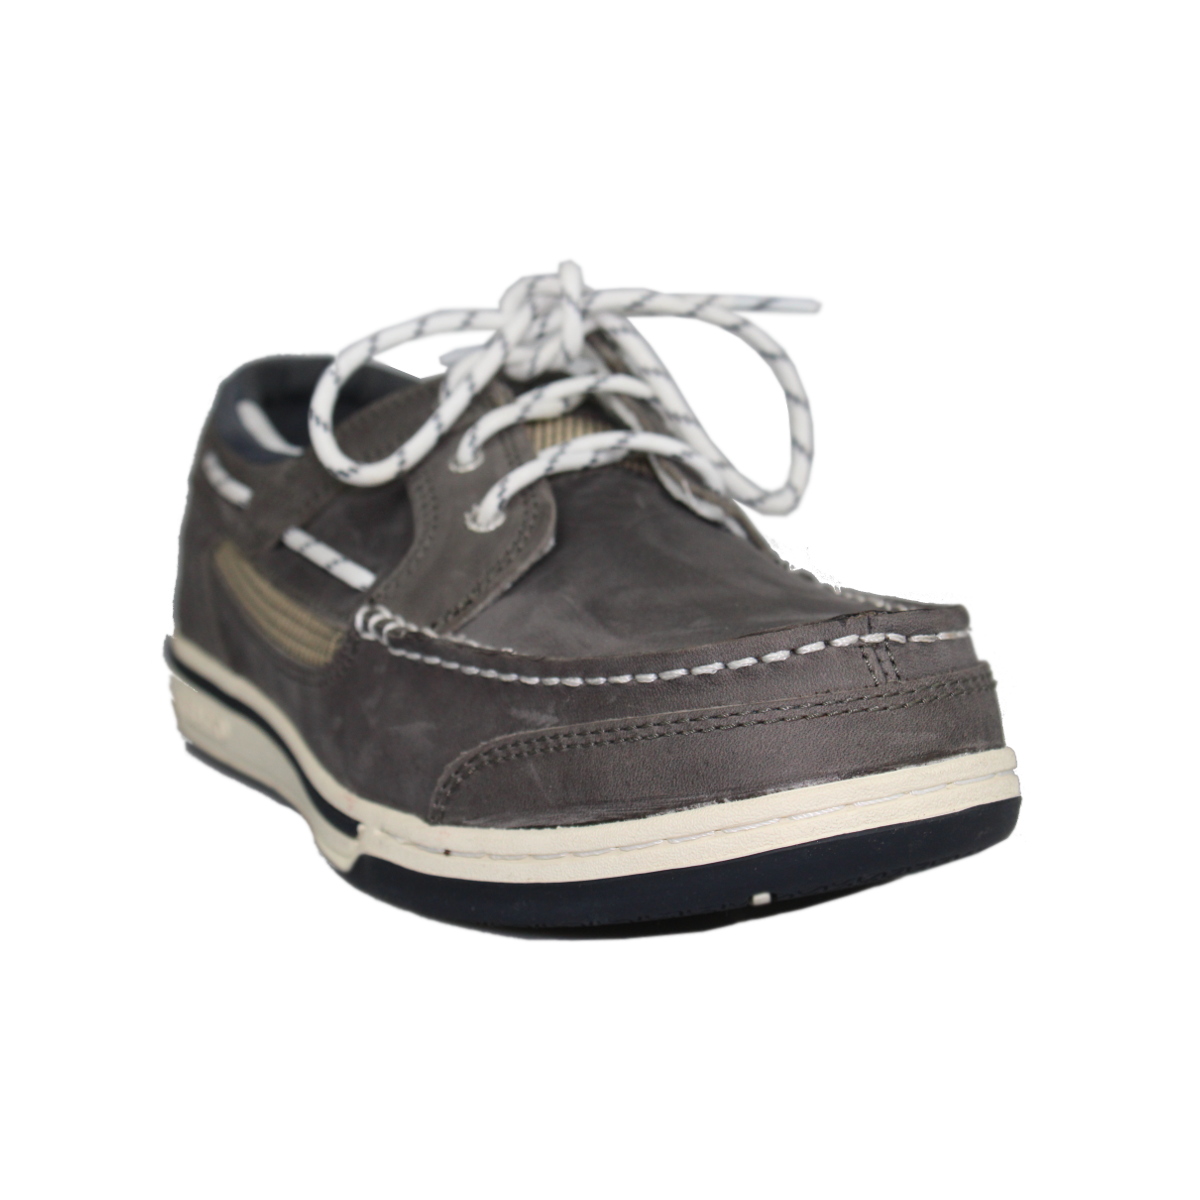 Sebago Triton Three-Eye chaussures bateau homme gris foncé-taupe, taille 45